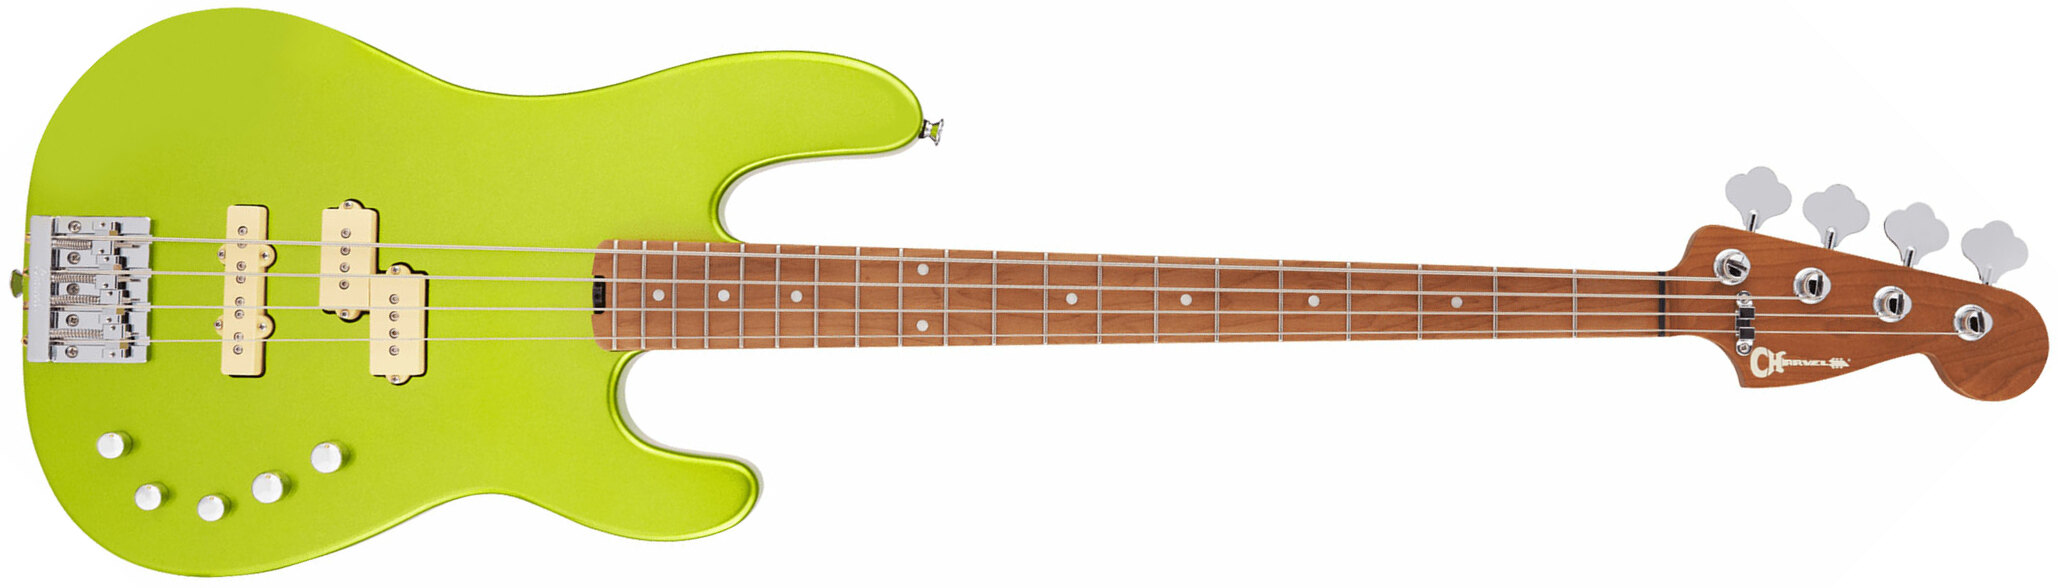 Charvel San Dimas Bass Pj Iv Pro-mod Mex 4c Active Mn - Lime Green Metallic - Solid body elektrische bas - Main picture